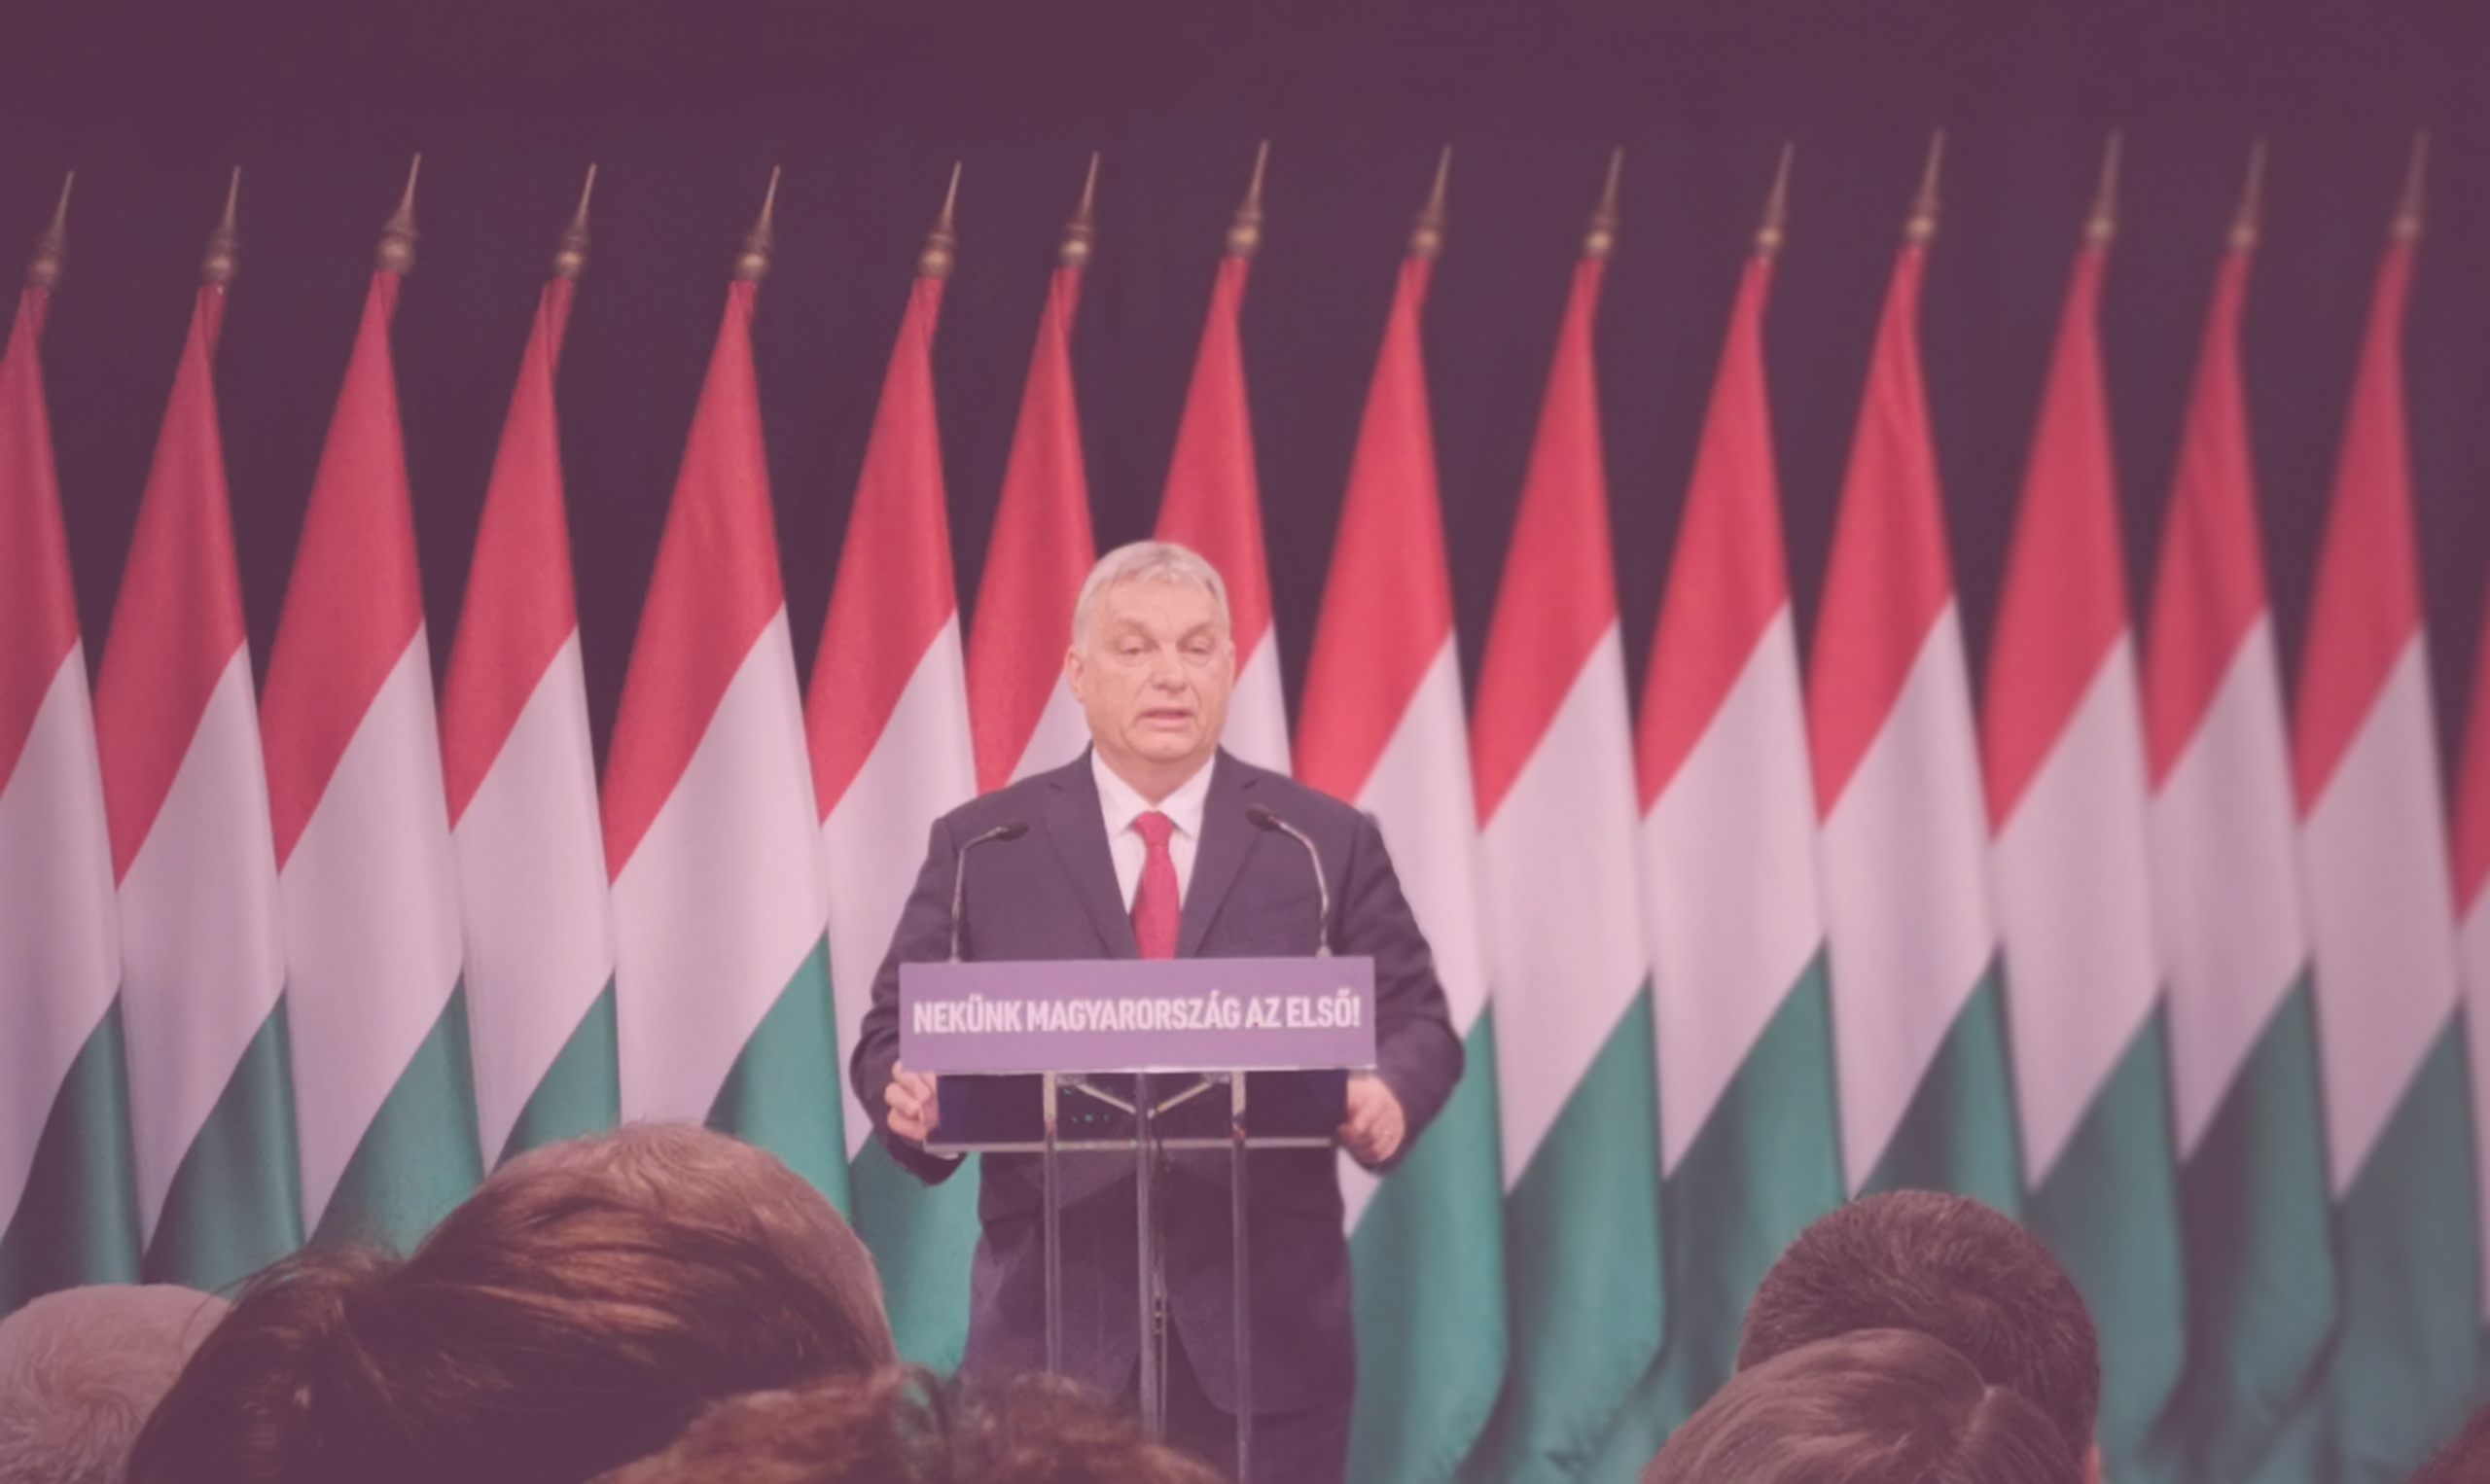 Eva Fodor – Orbánistan and the Anti-gender Rhetoric in Hungary